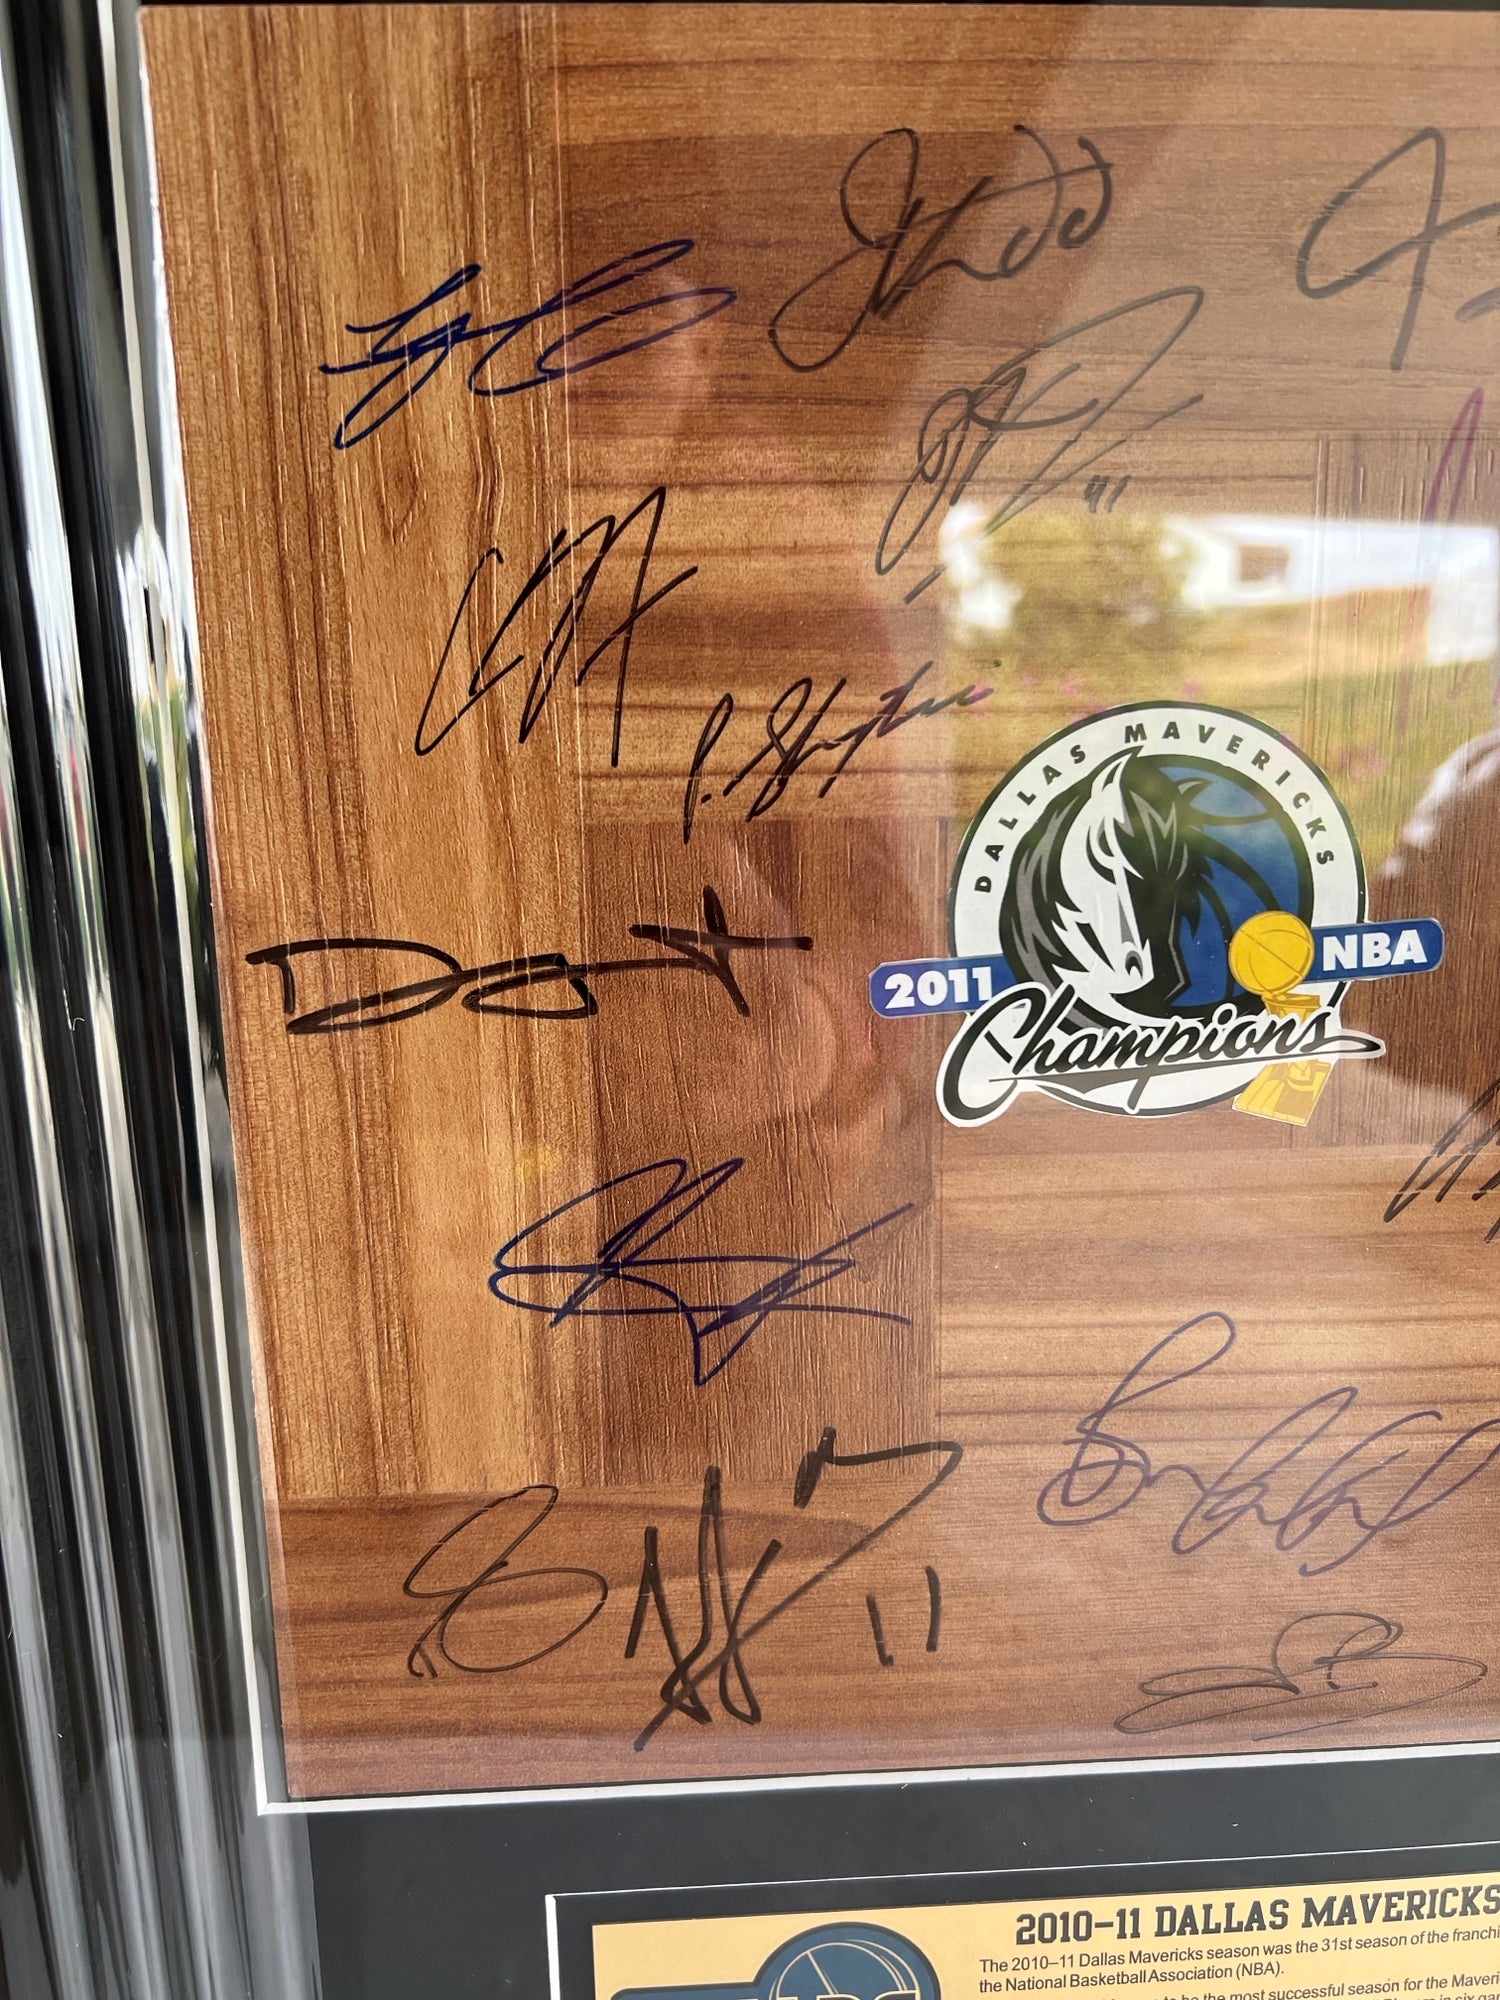 Dallas Mavericks Dirk Nowitzki, Jason Kidd 2010-11 NBA champions Team parquet floor board signed & framed 32x18in with proof